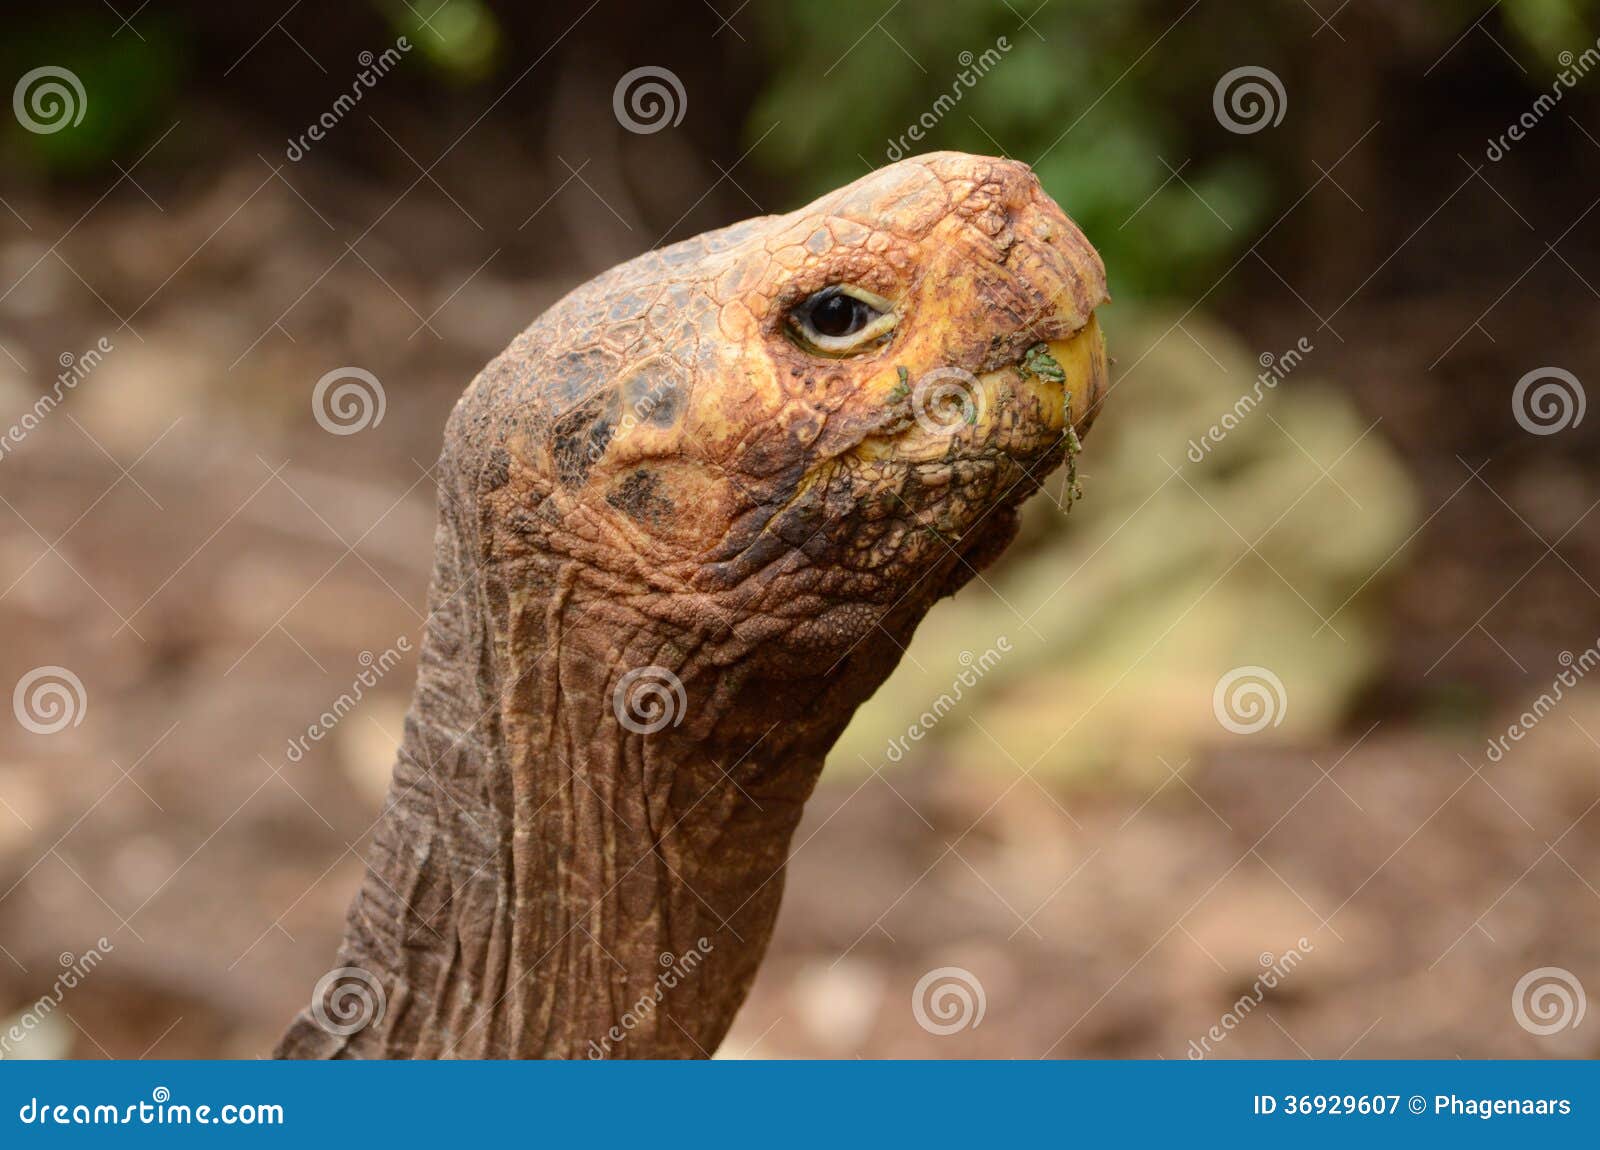 galapagos giant tortoise (chelonoidis nigra)